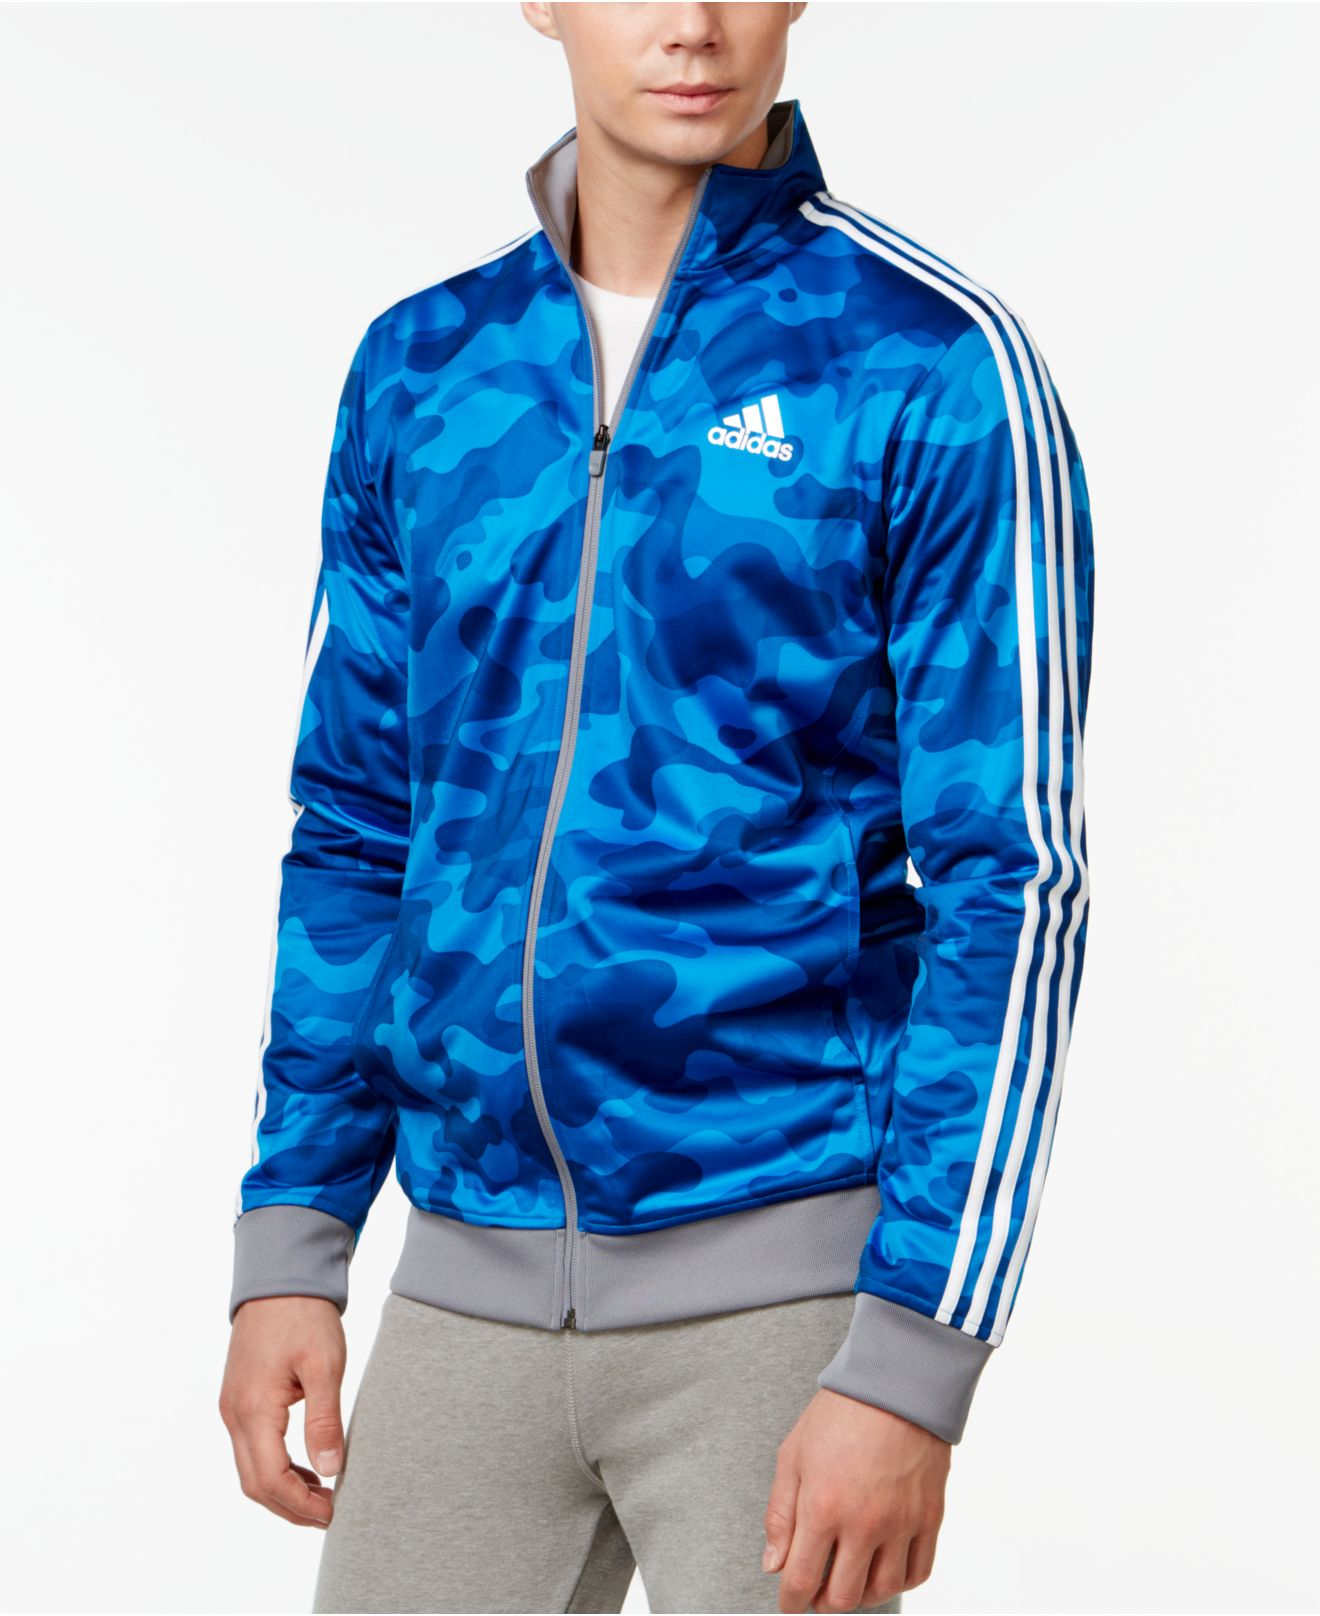 adidas Originals Men's Camo Print Track Jacket in Blue for Men - Lyst